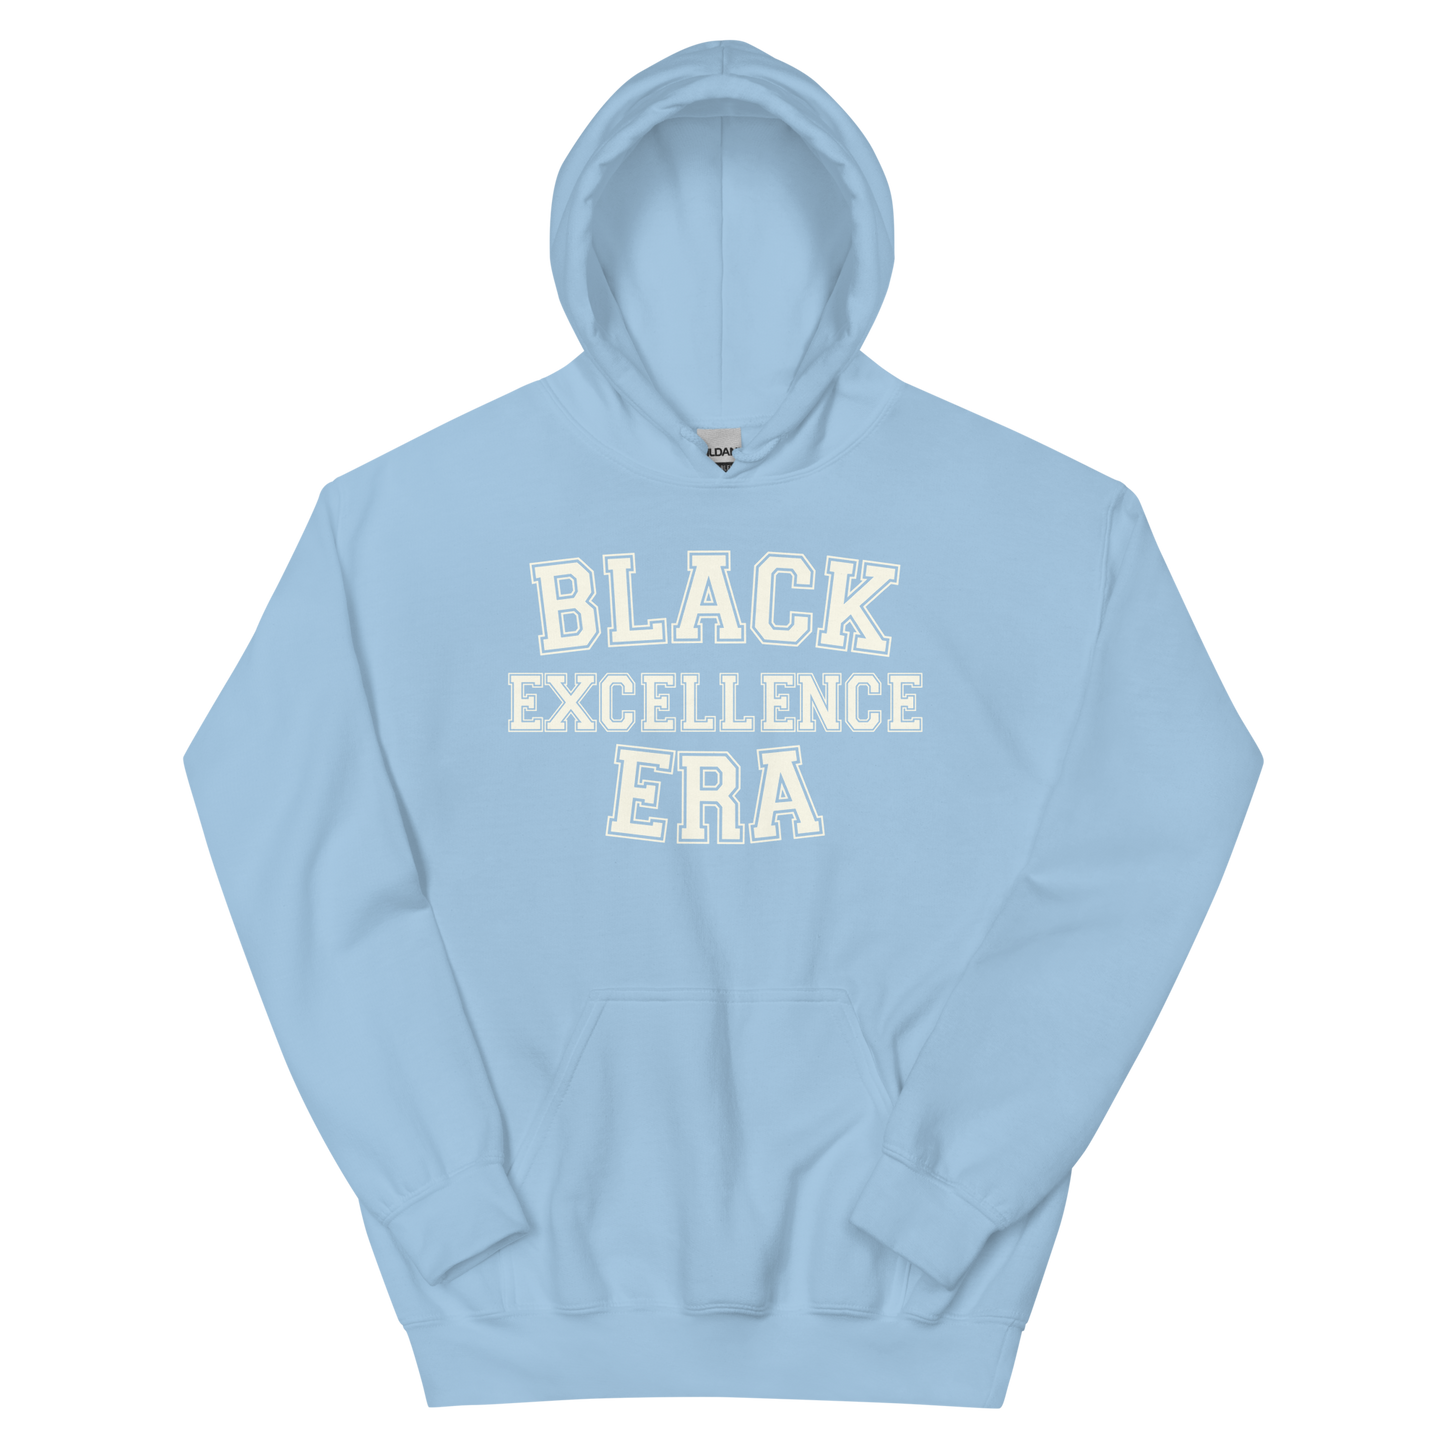 Black Excellence Colors Hoodie